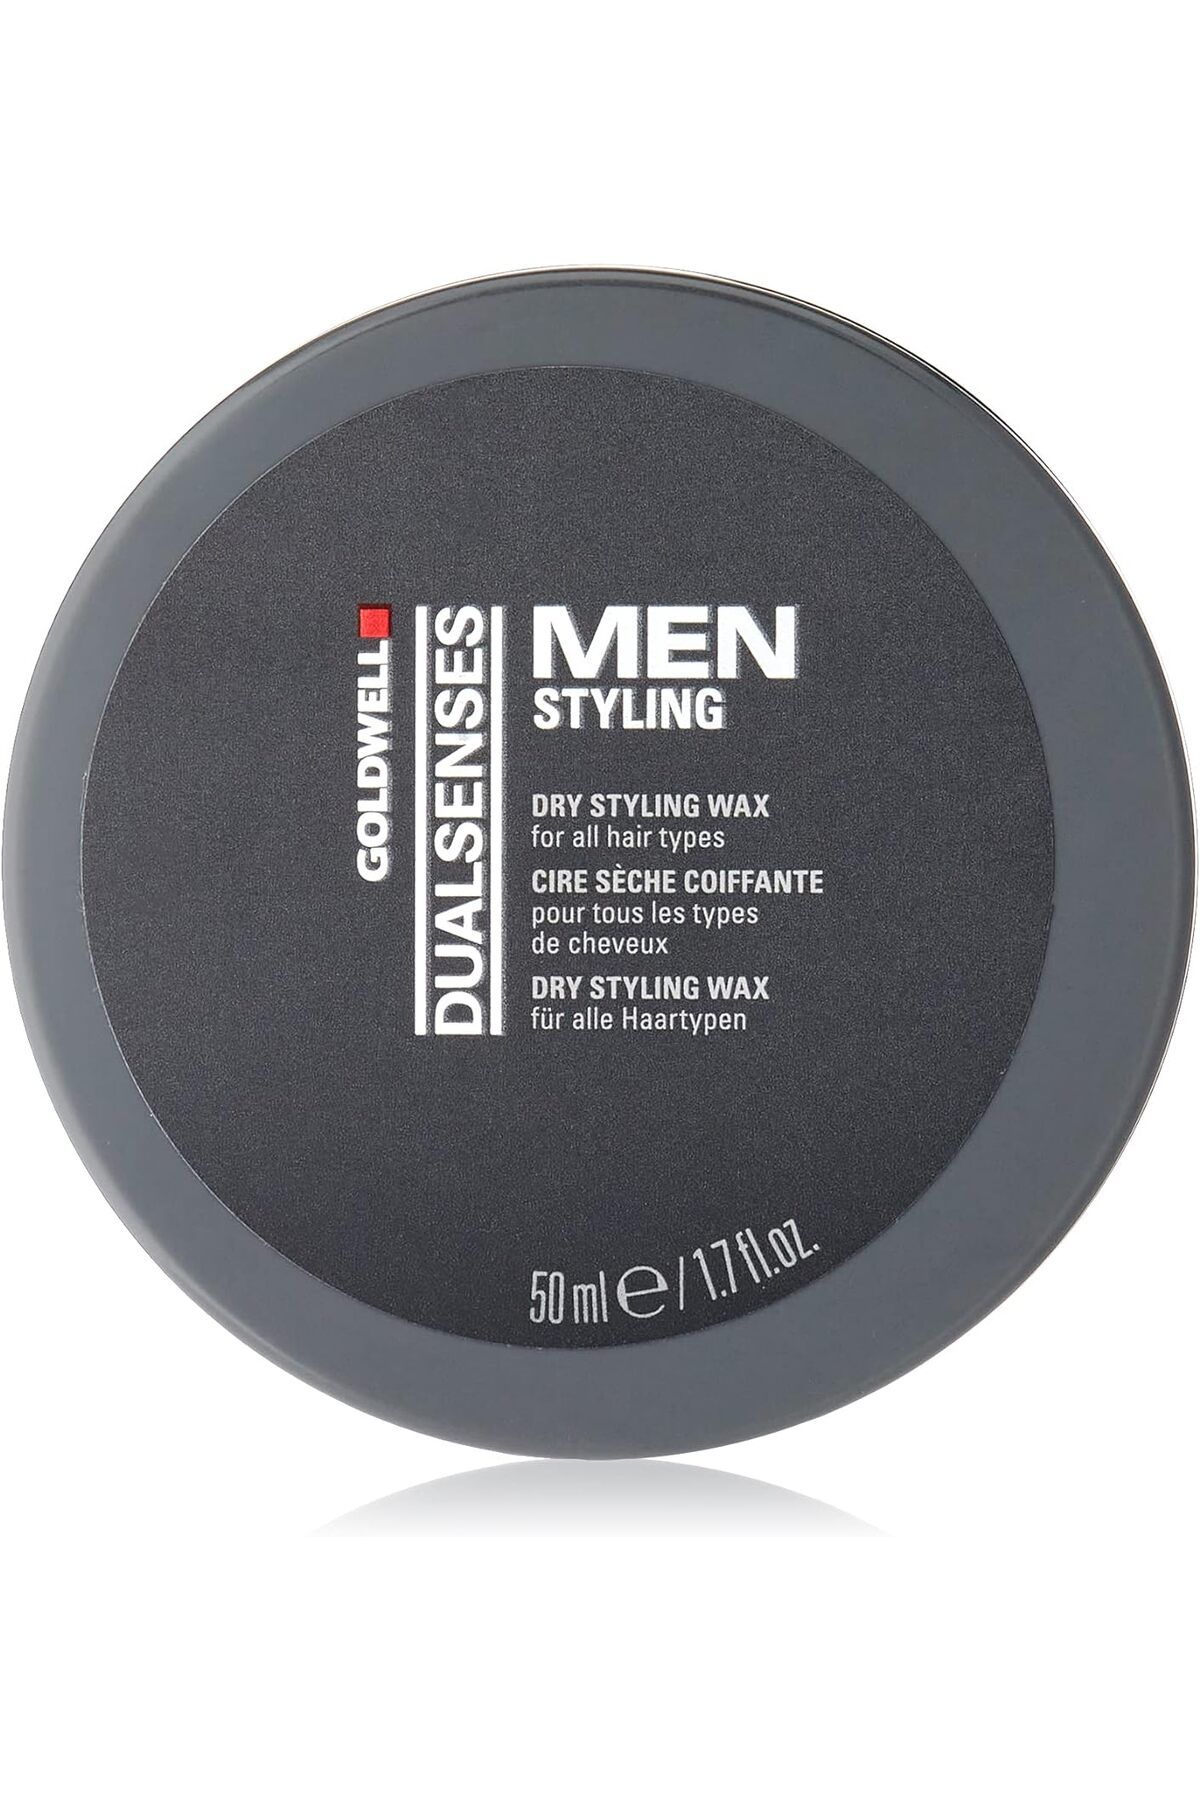 GOLDWELL Dualsenses Dry Styling Wax for Men - Erkeklere Özel Kuru Şekillendirici Wax 50 ml